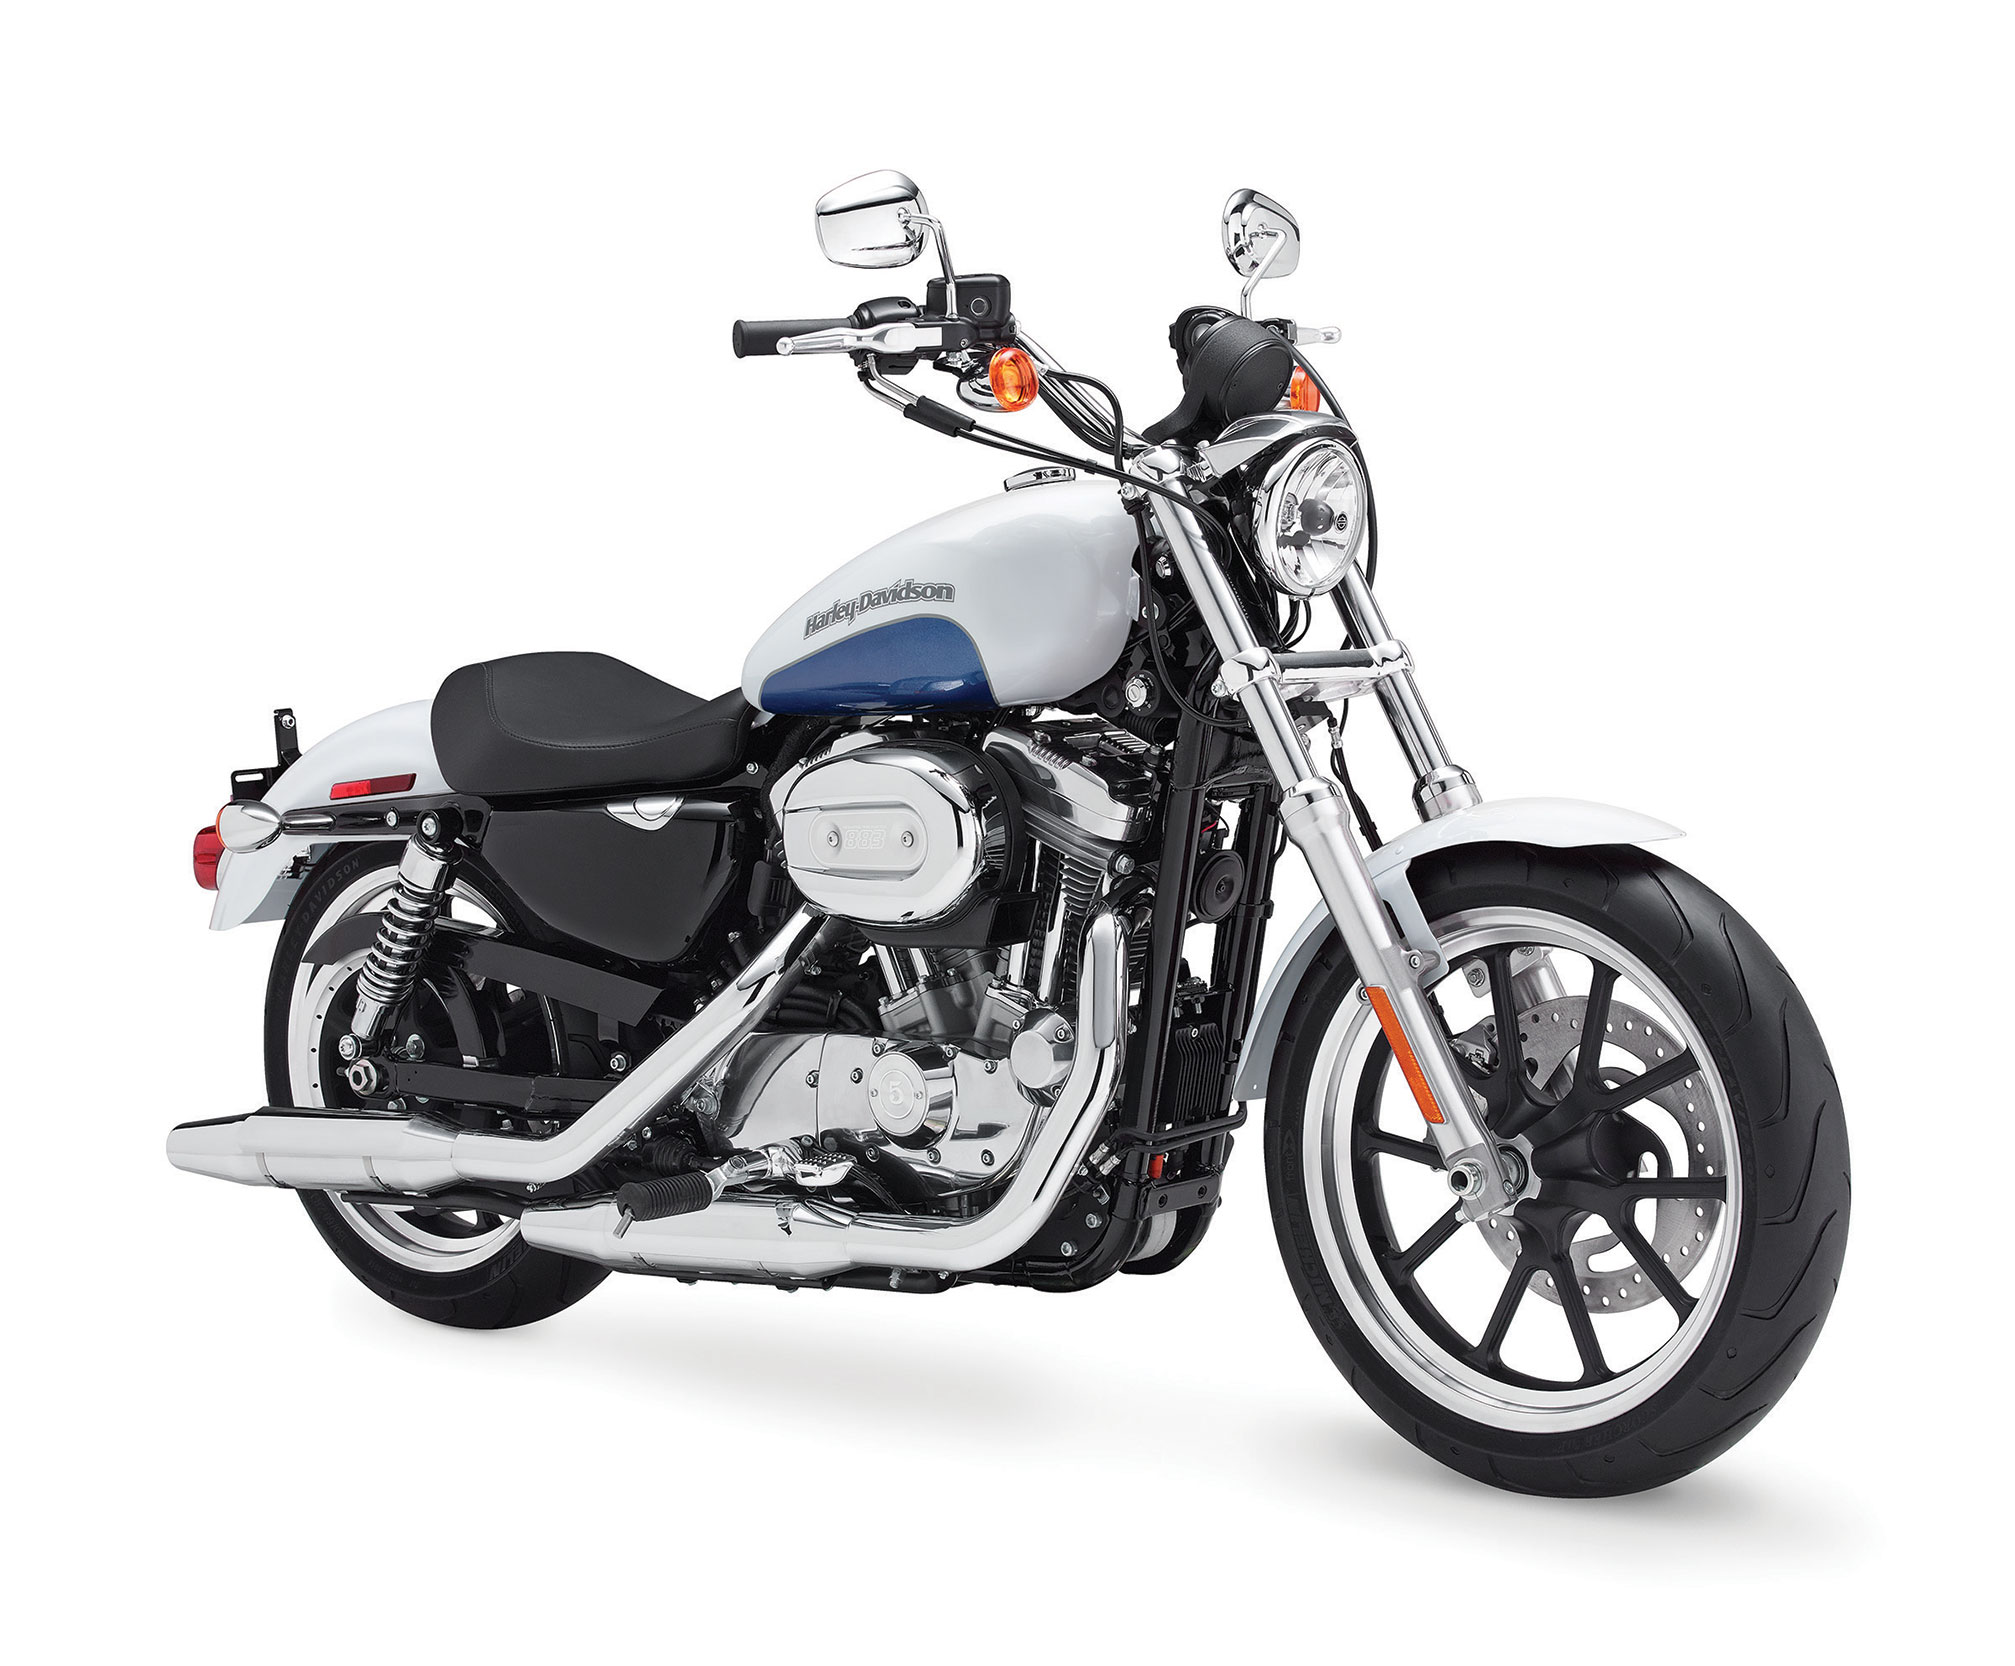 2015 Harley Davidson Xl883l Superlow Review